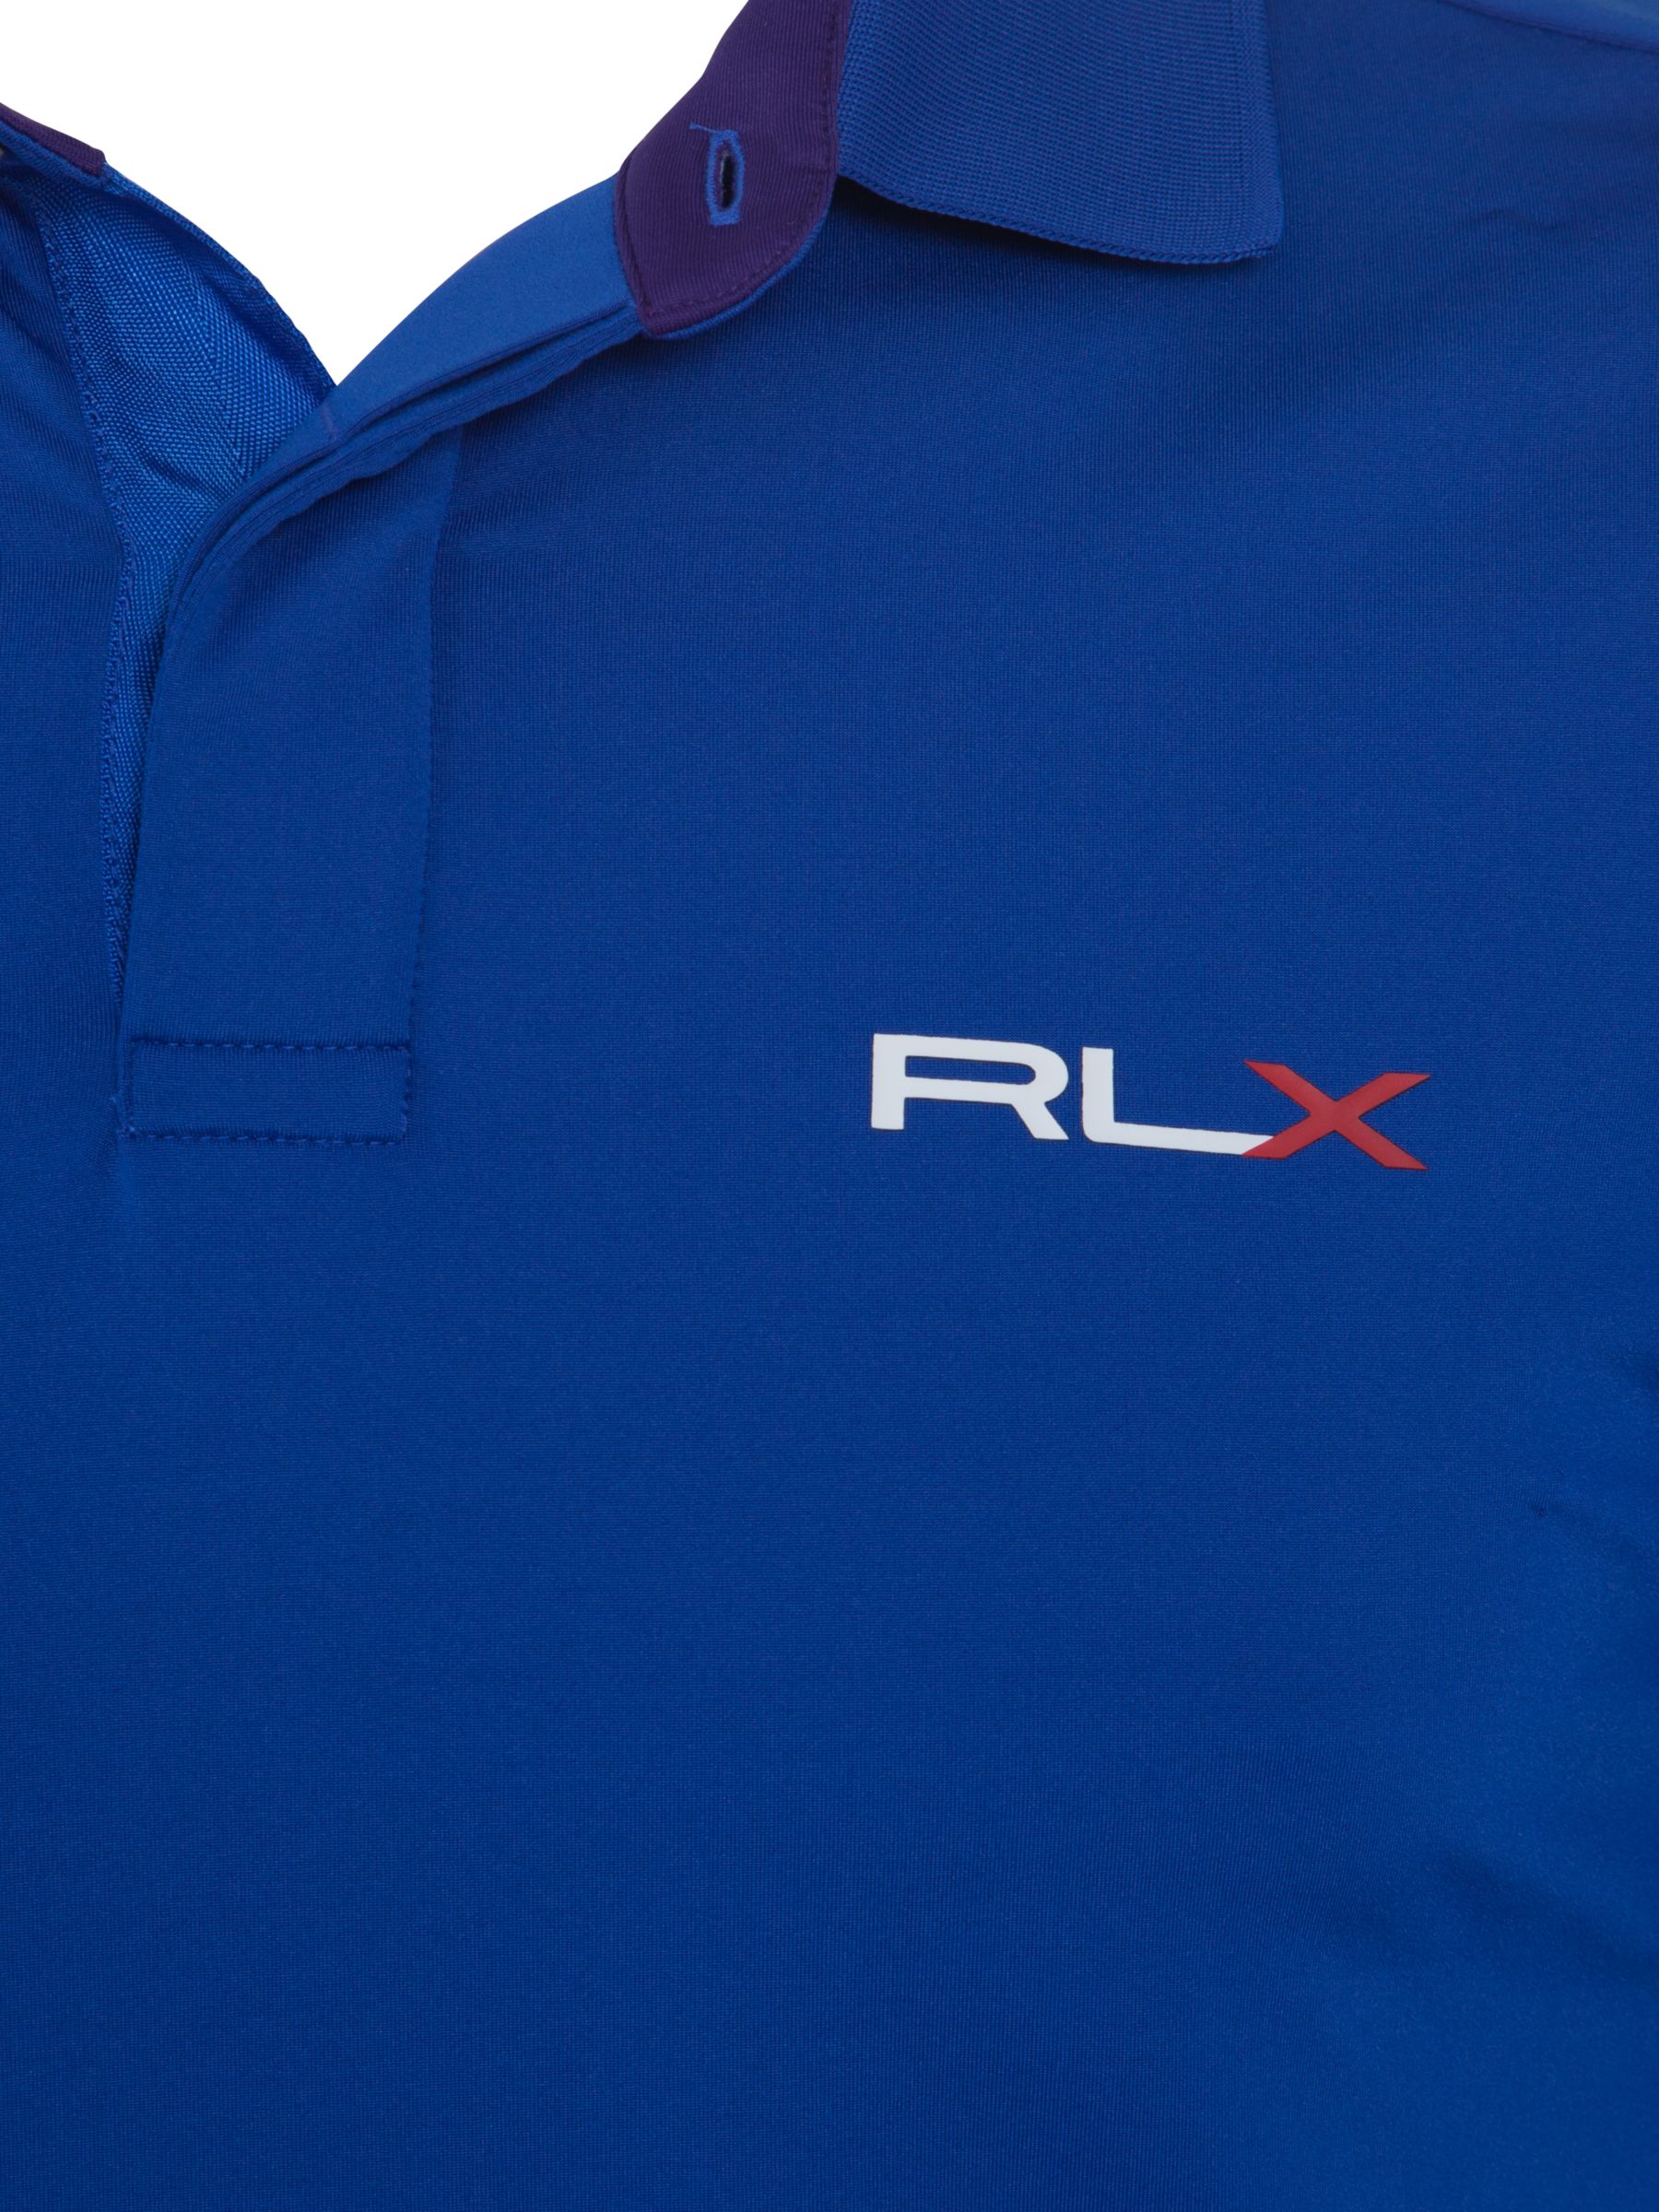 rlx golf clothing